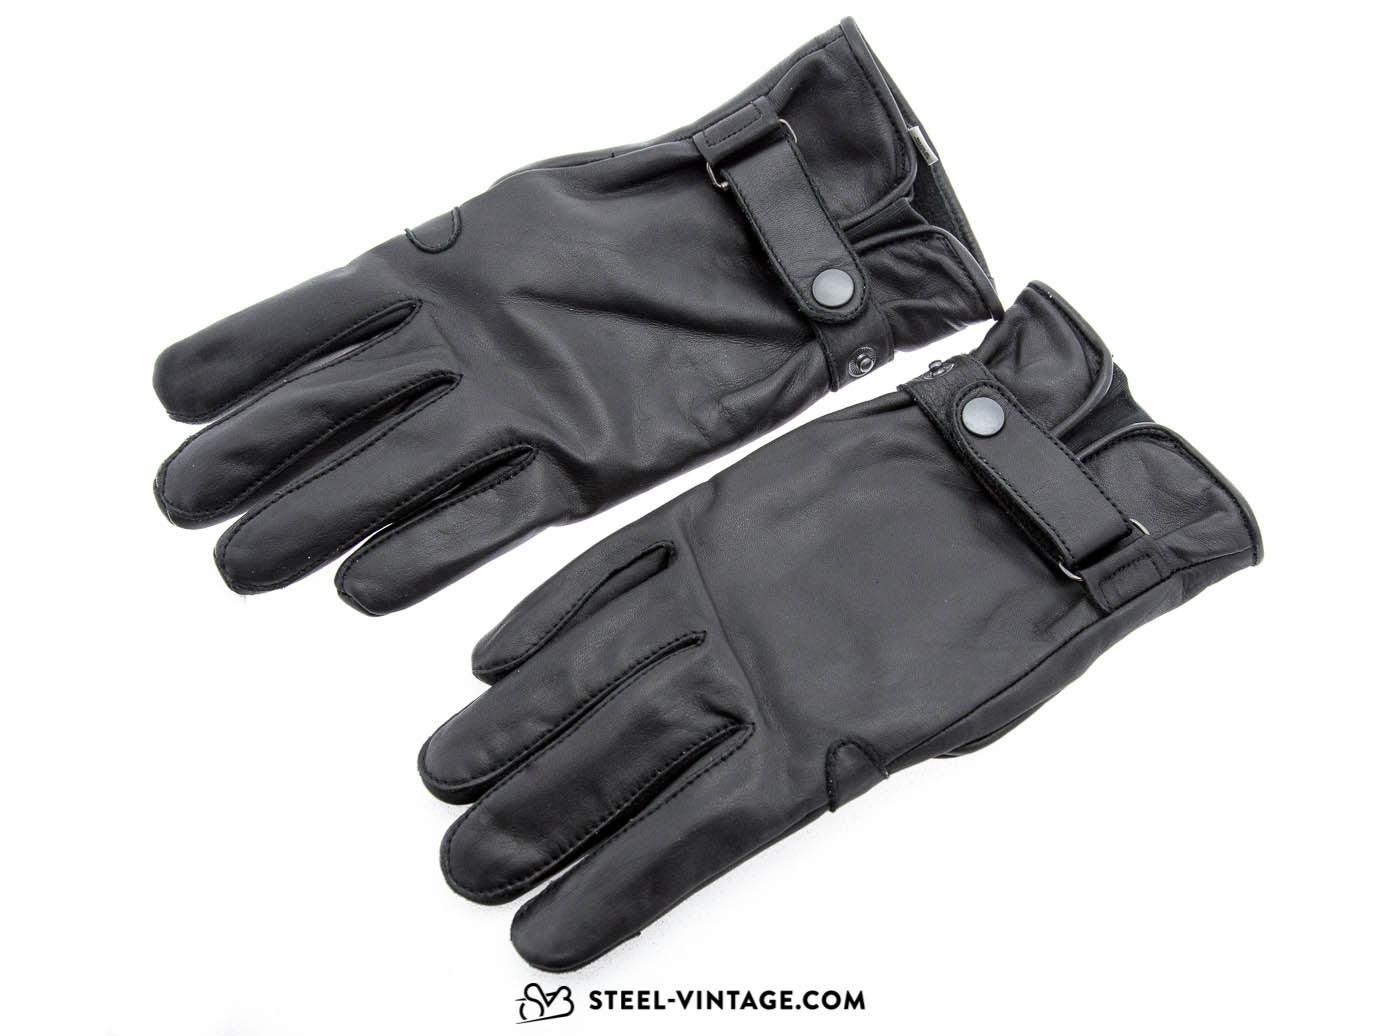 Fdx AQUA Full Finger Winter Cycling Gloves Black & Yellow